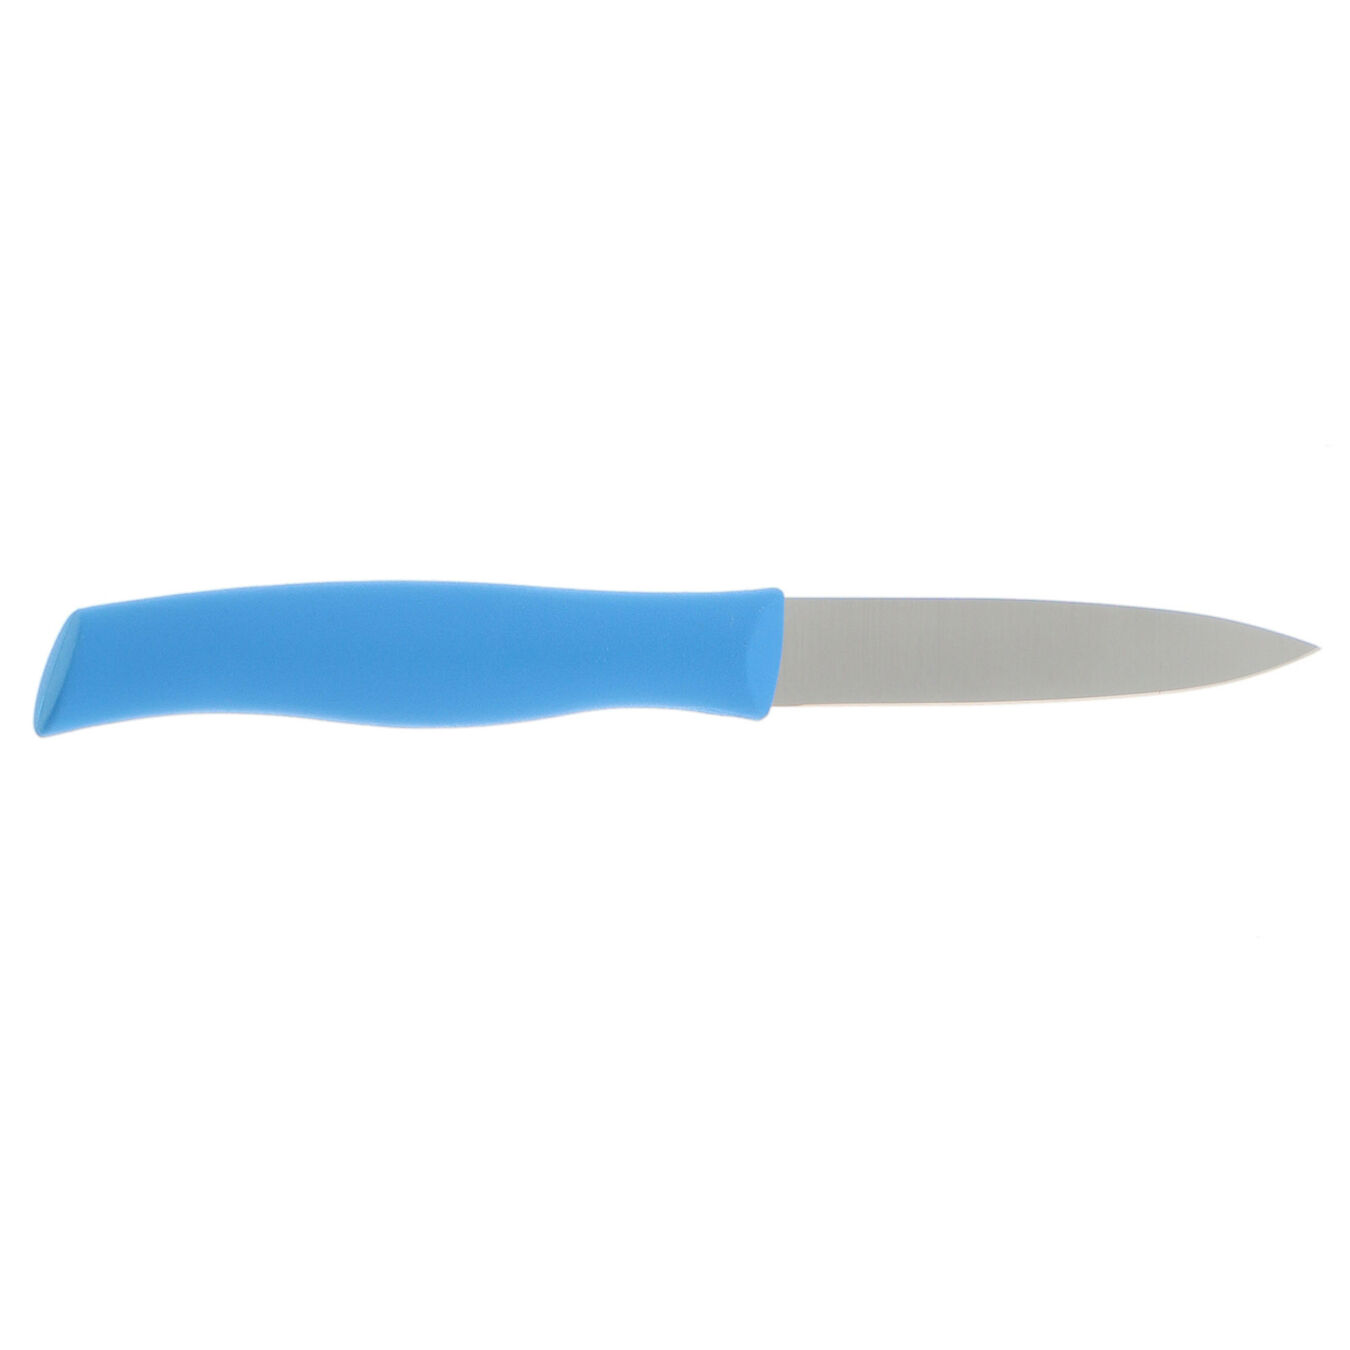 3.5-inch, Paring Knife Blue,,large 2